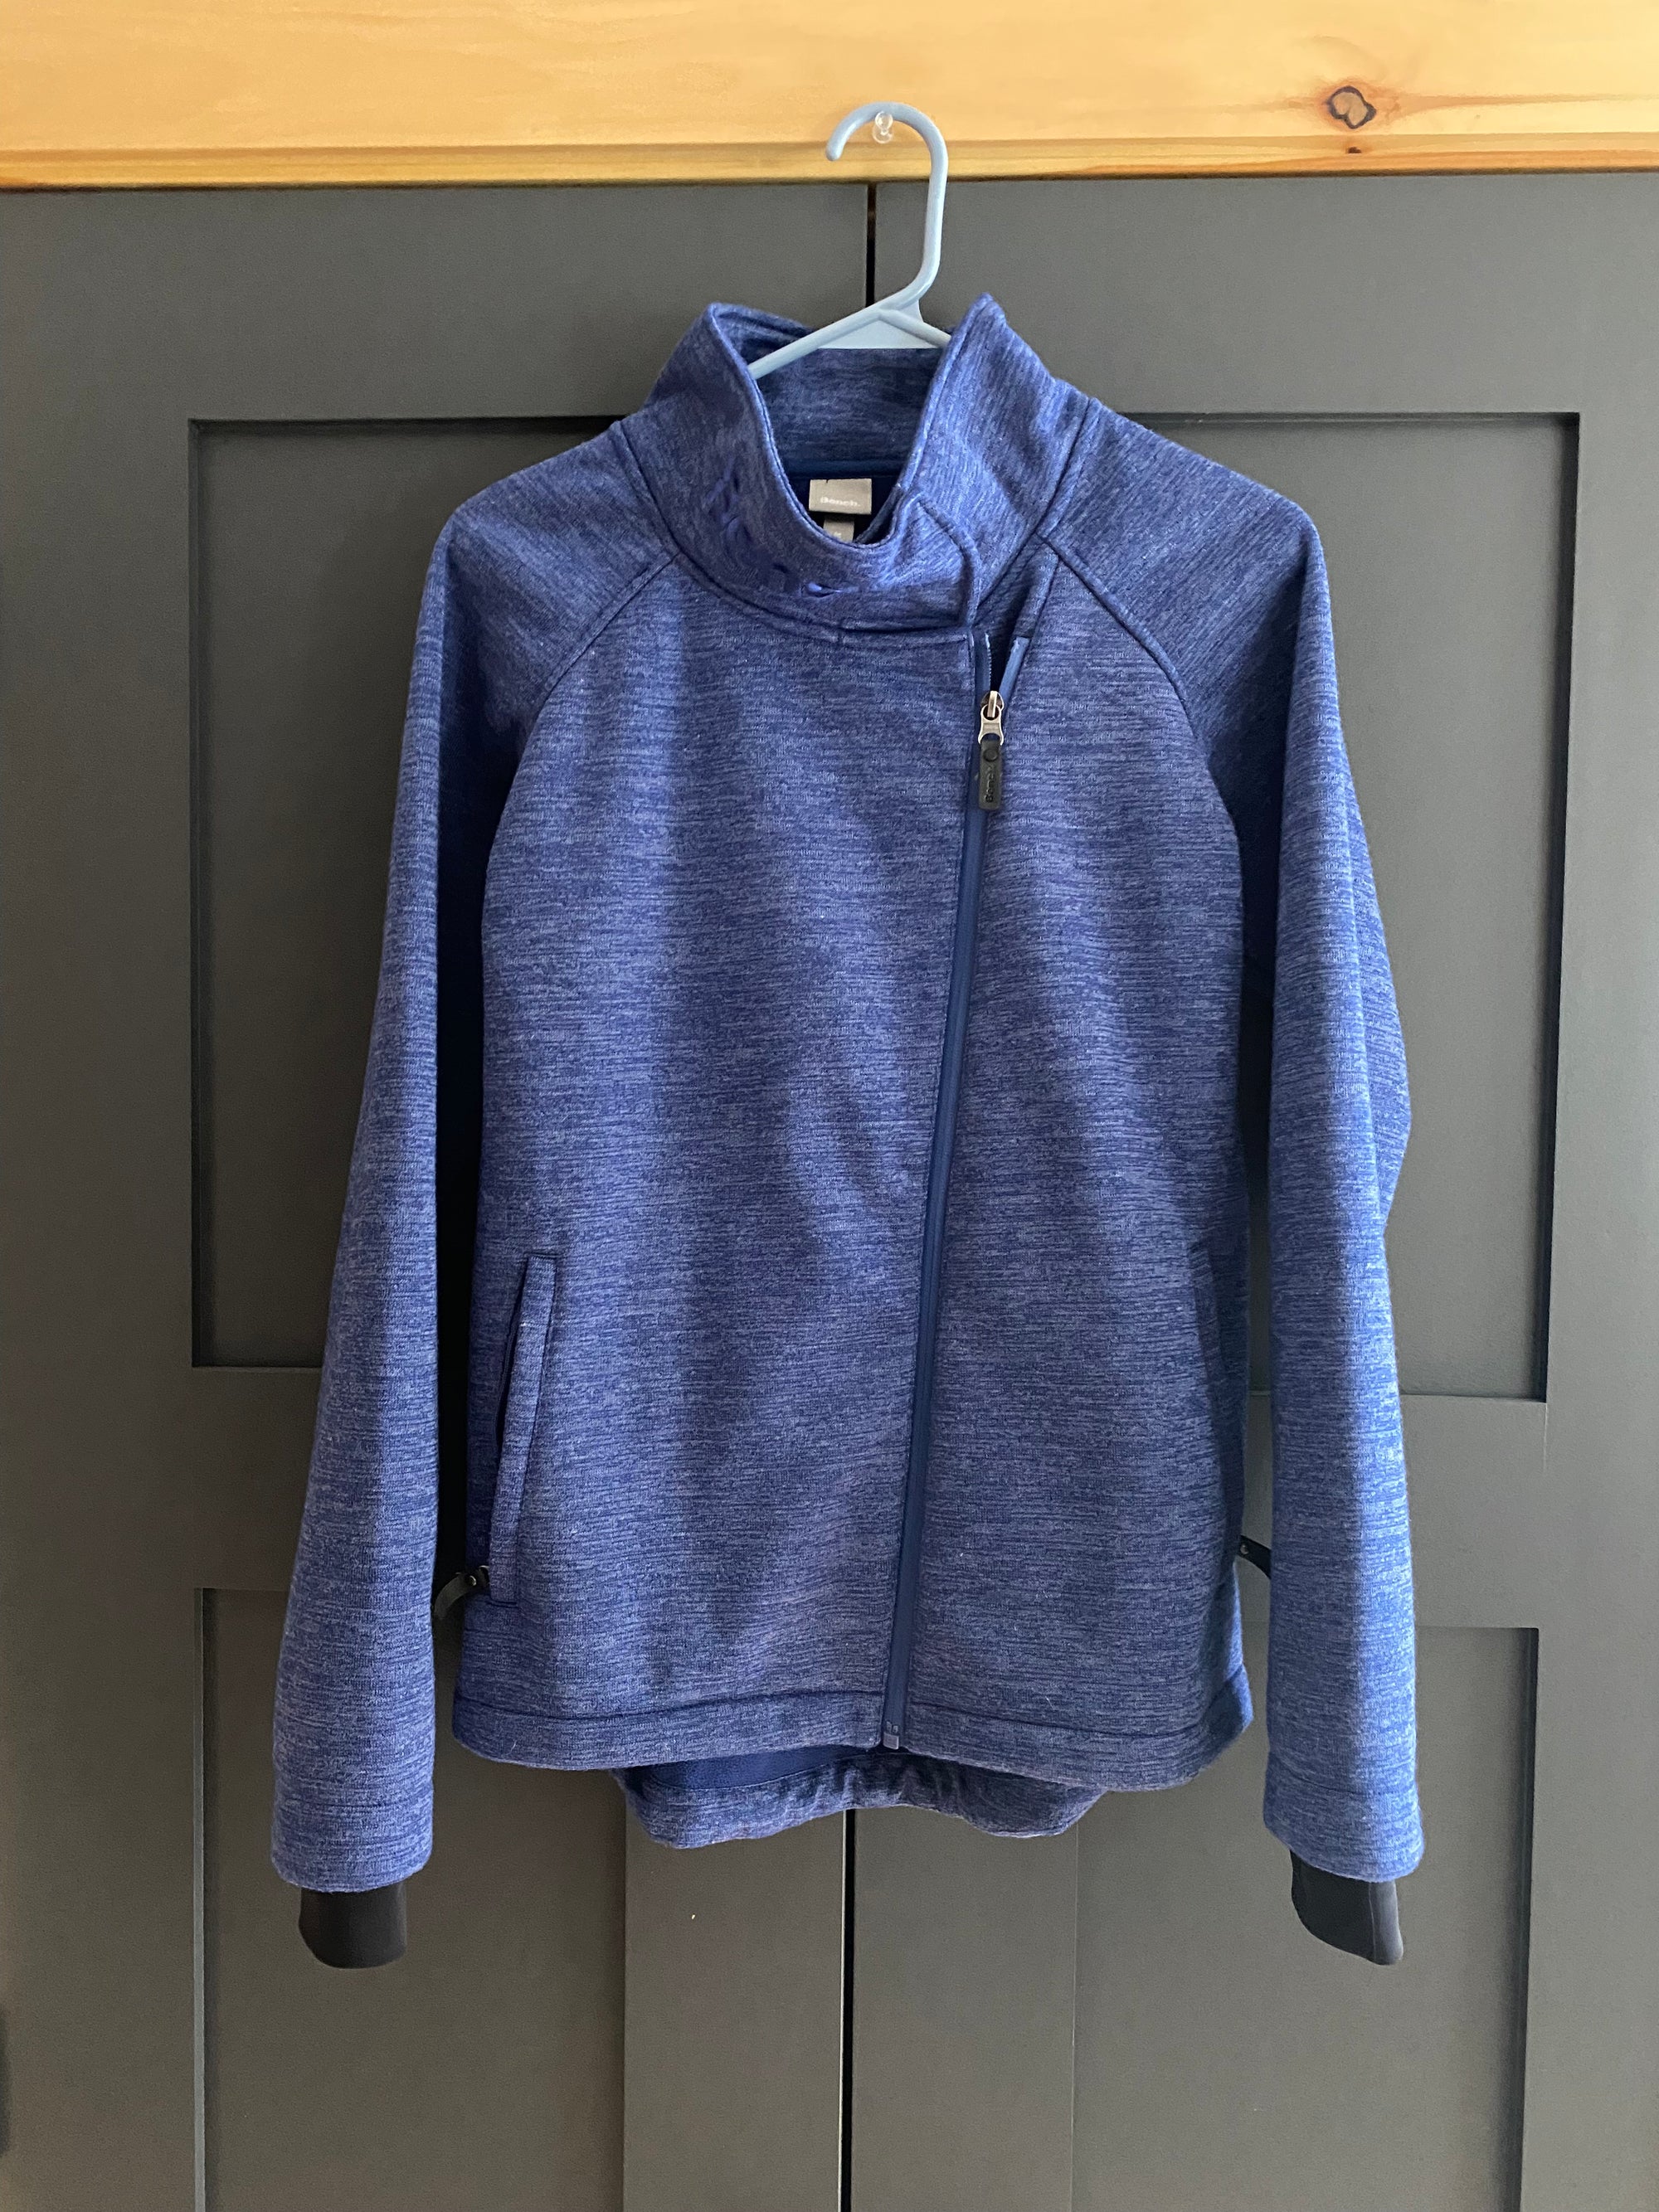 Full Zip Sweater/Jacket (Women's MEDIUM)